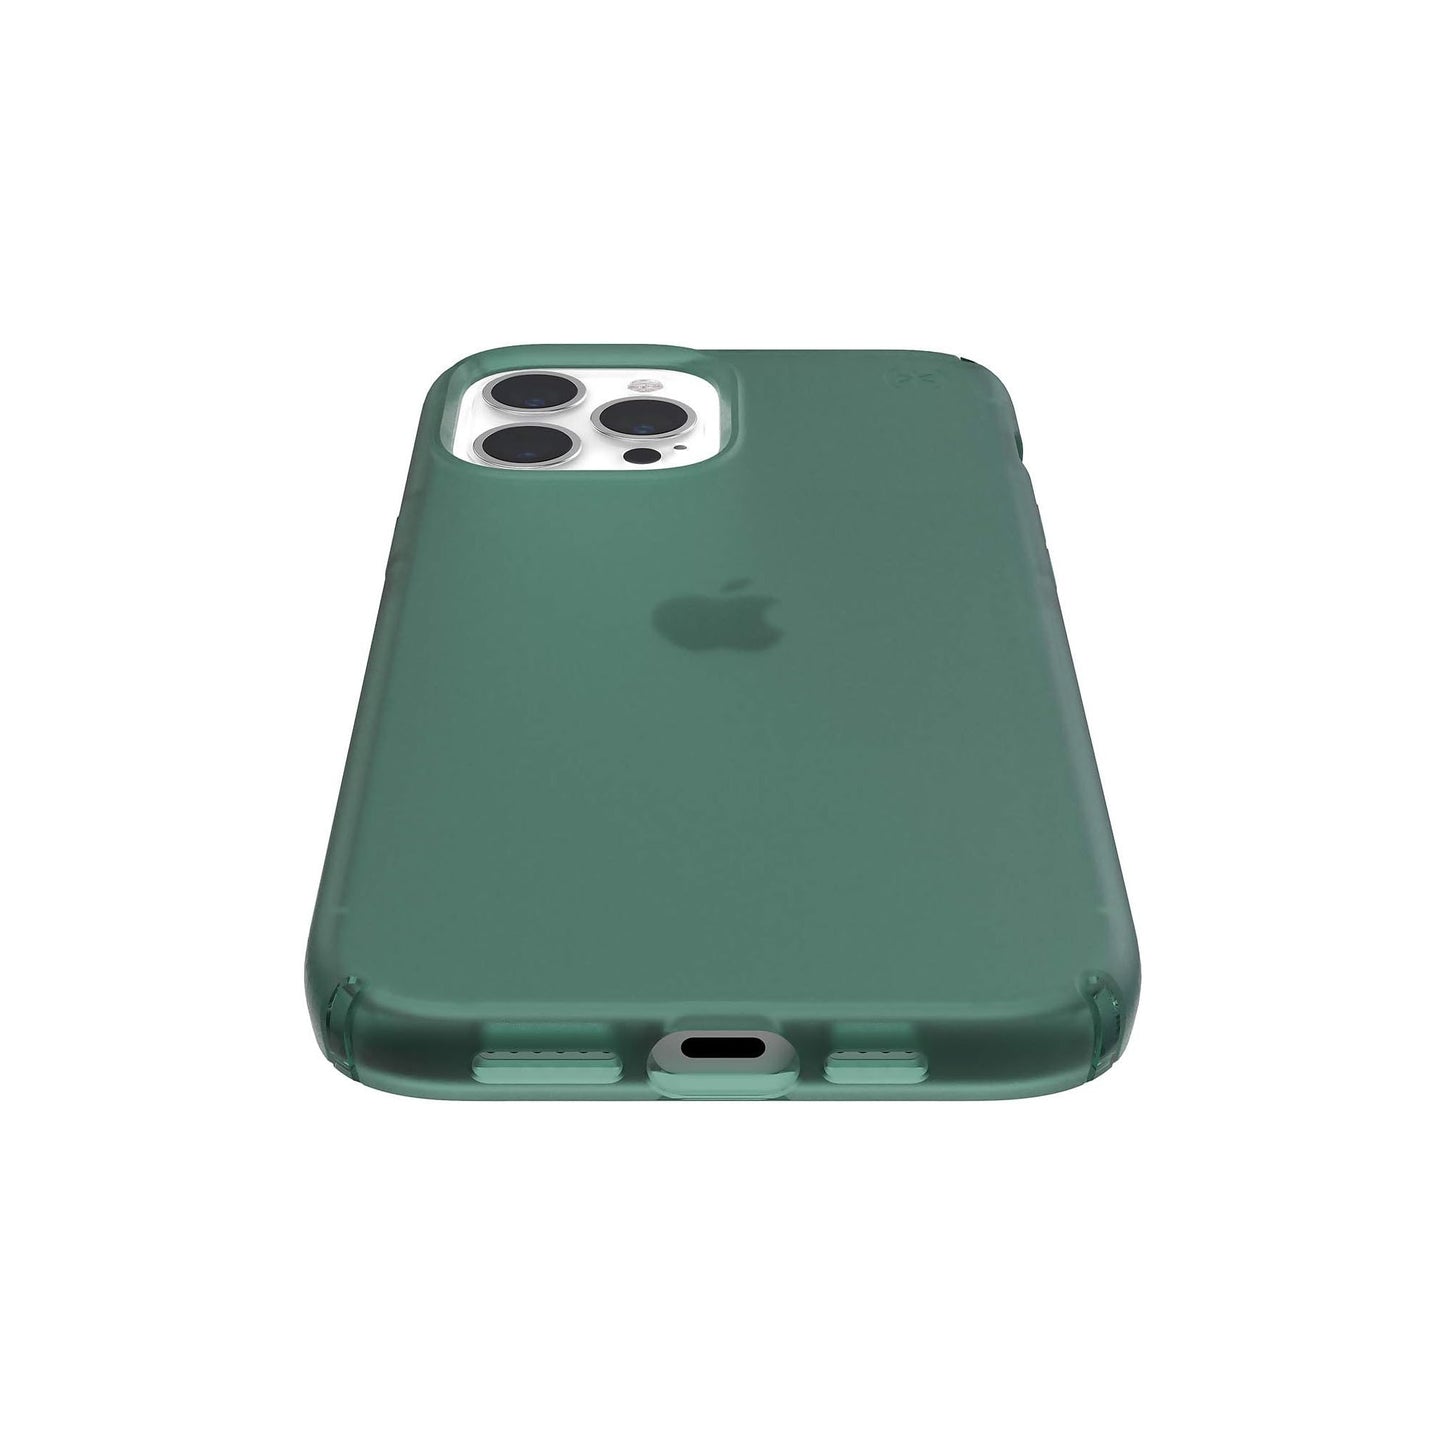 SPECK Presidio Perfect-Mist Case for iPhone 12 Pro Max - Fern Green/Fern Green